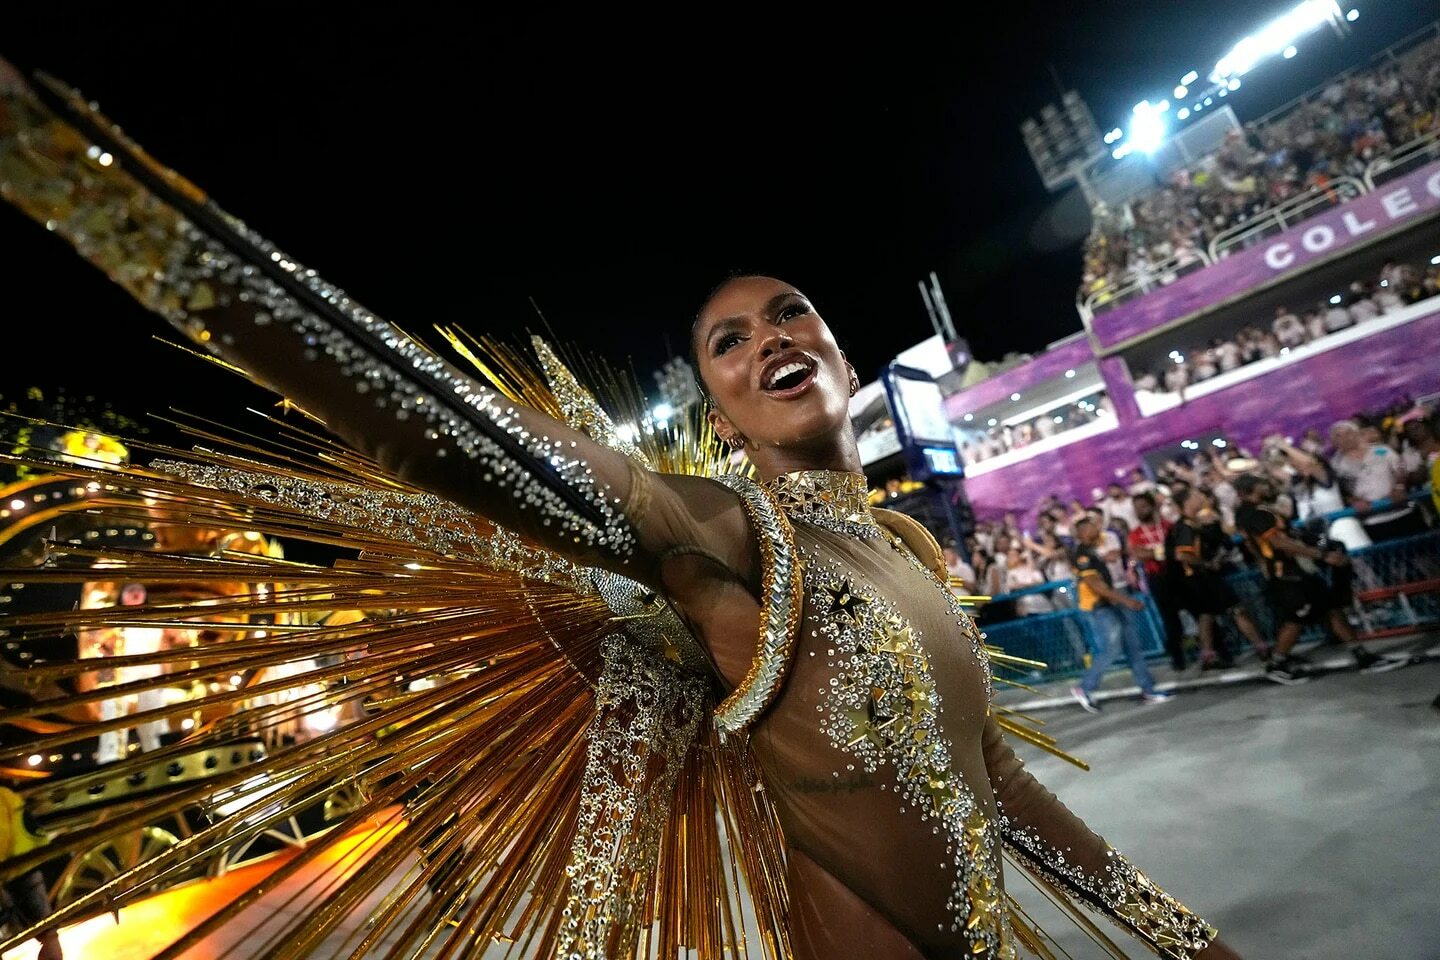 54534 Rio Carnival Images, Stock Photos & Vectors